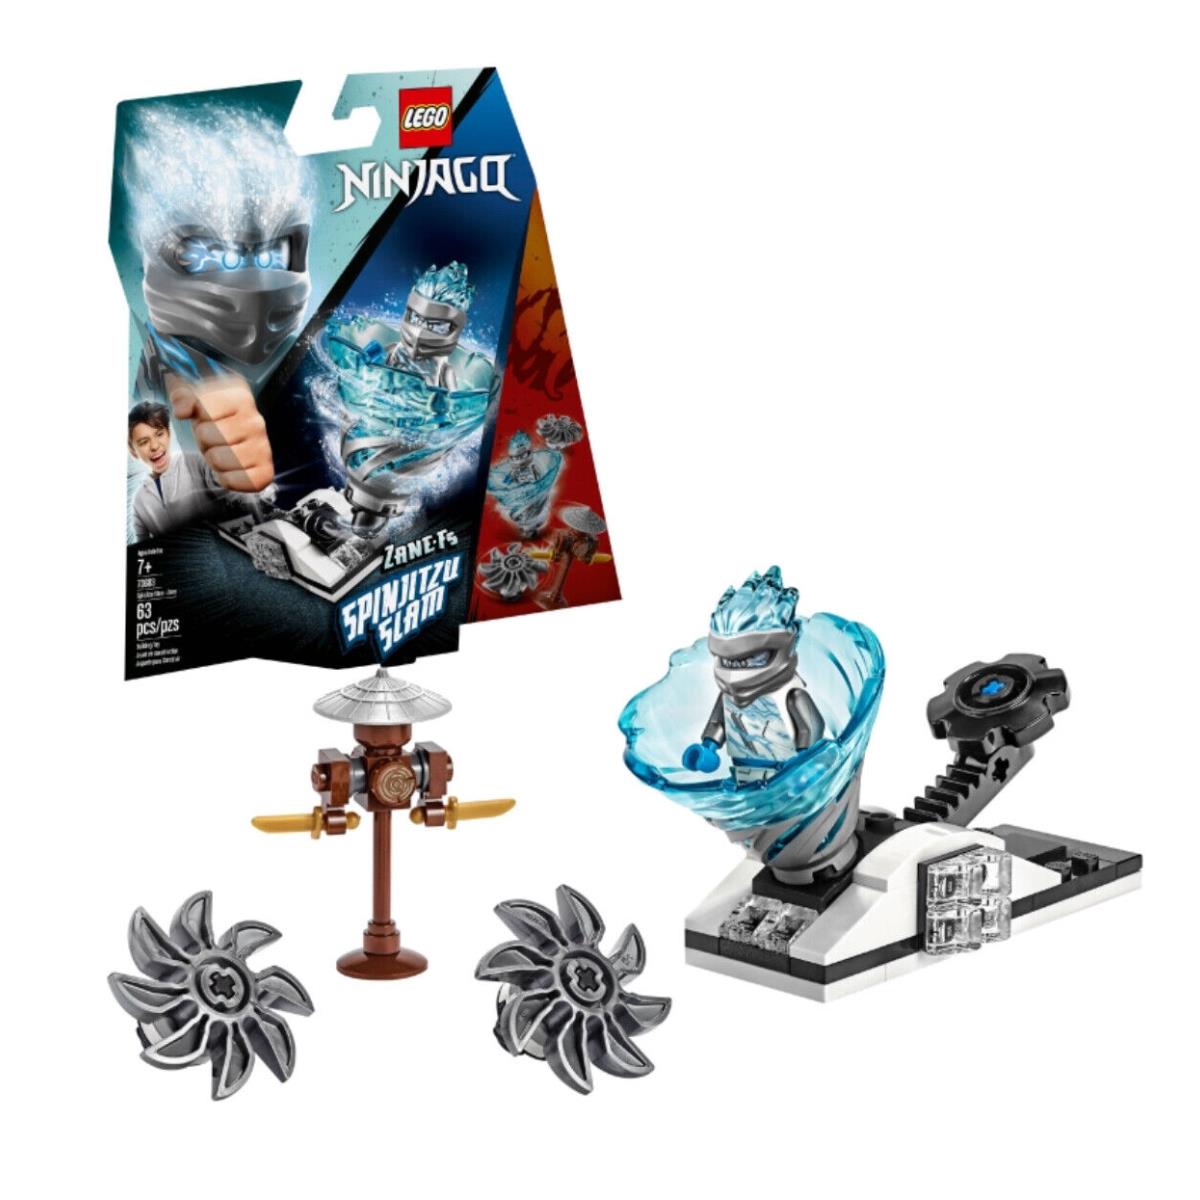 Lego 70683 Spinjitzu Slam Zane-fs Ninjago Set Ninja Spinner Ice